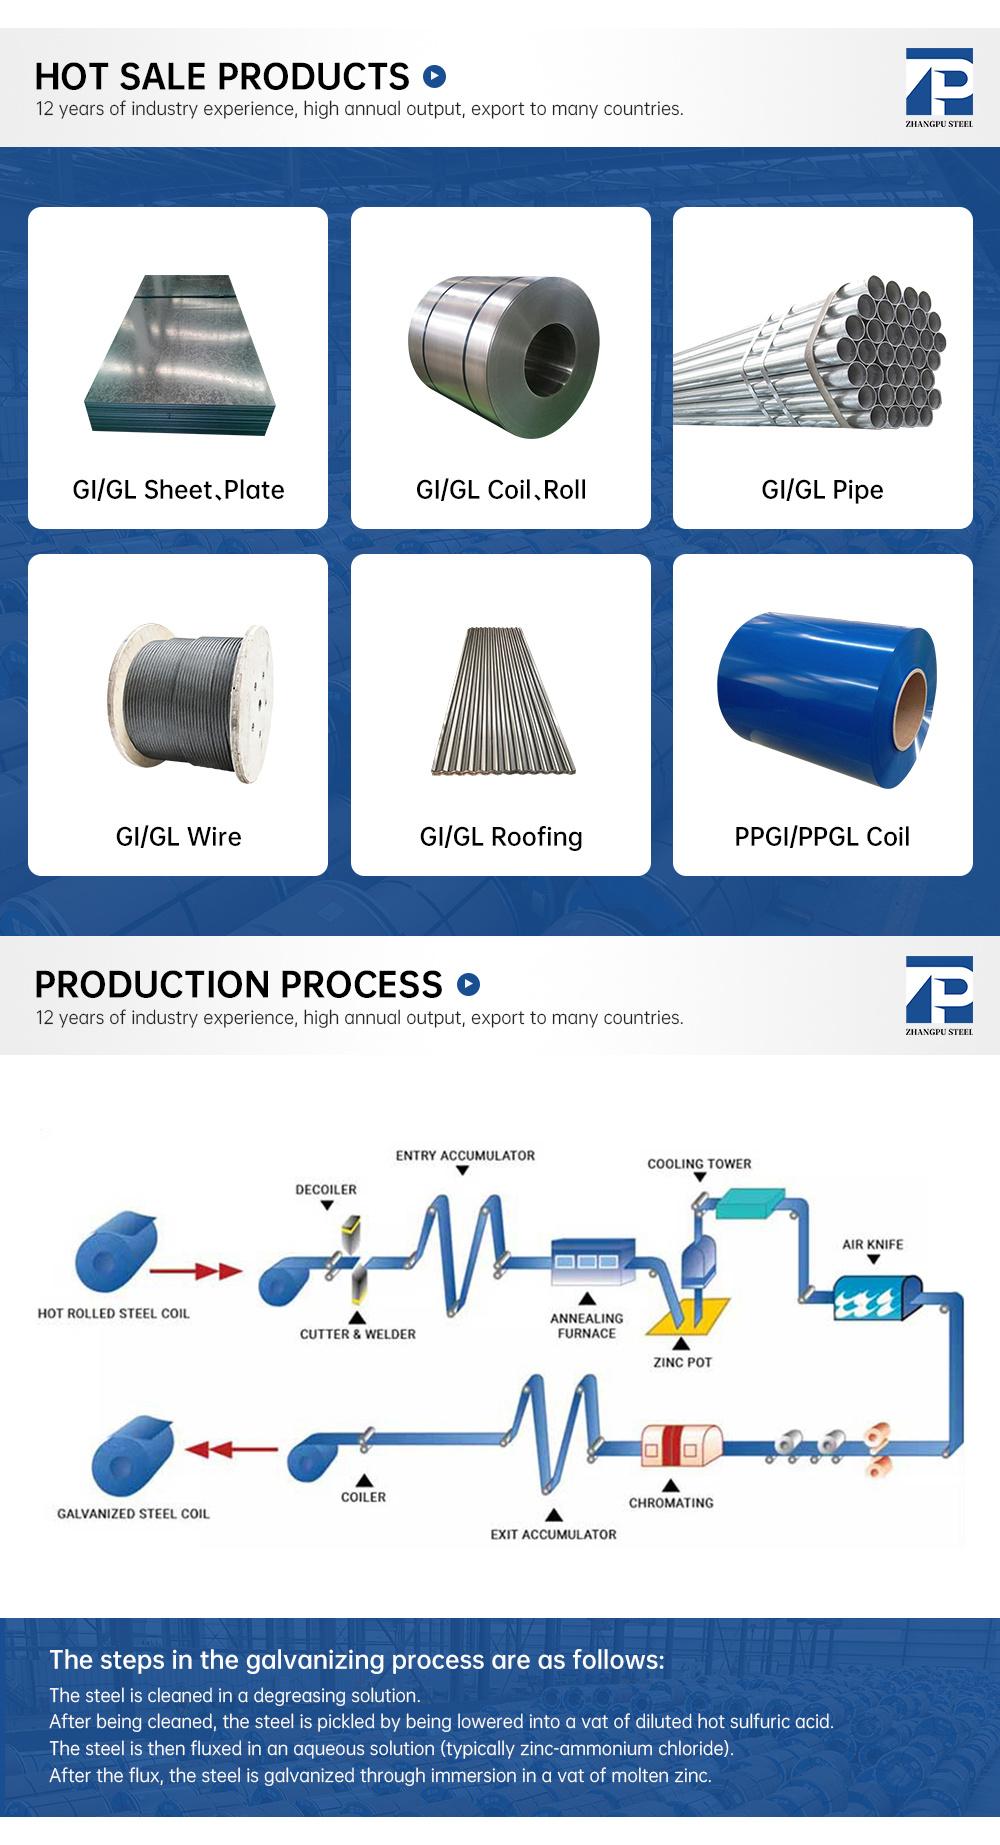 Coils Colour Steel PPGI Prepainted Steel Produce 600-1250mm Width Steel Coil